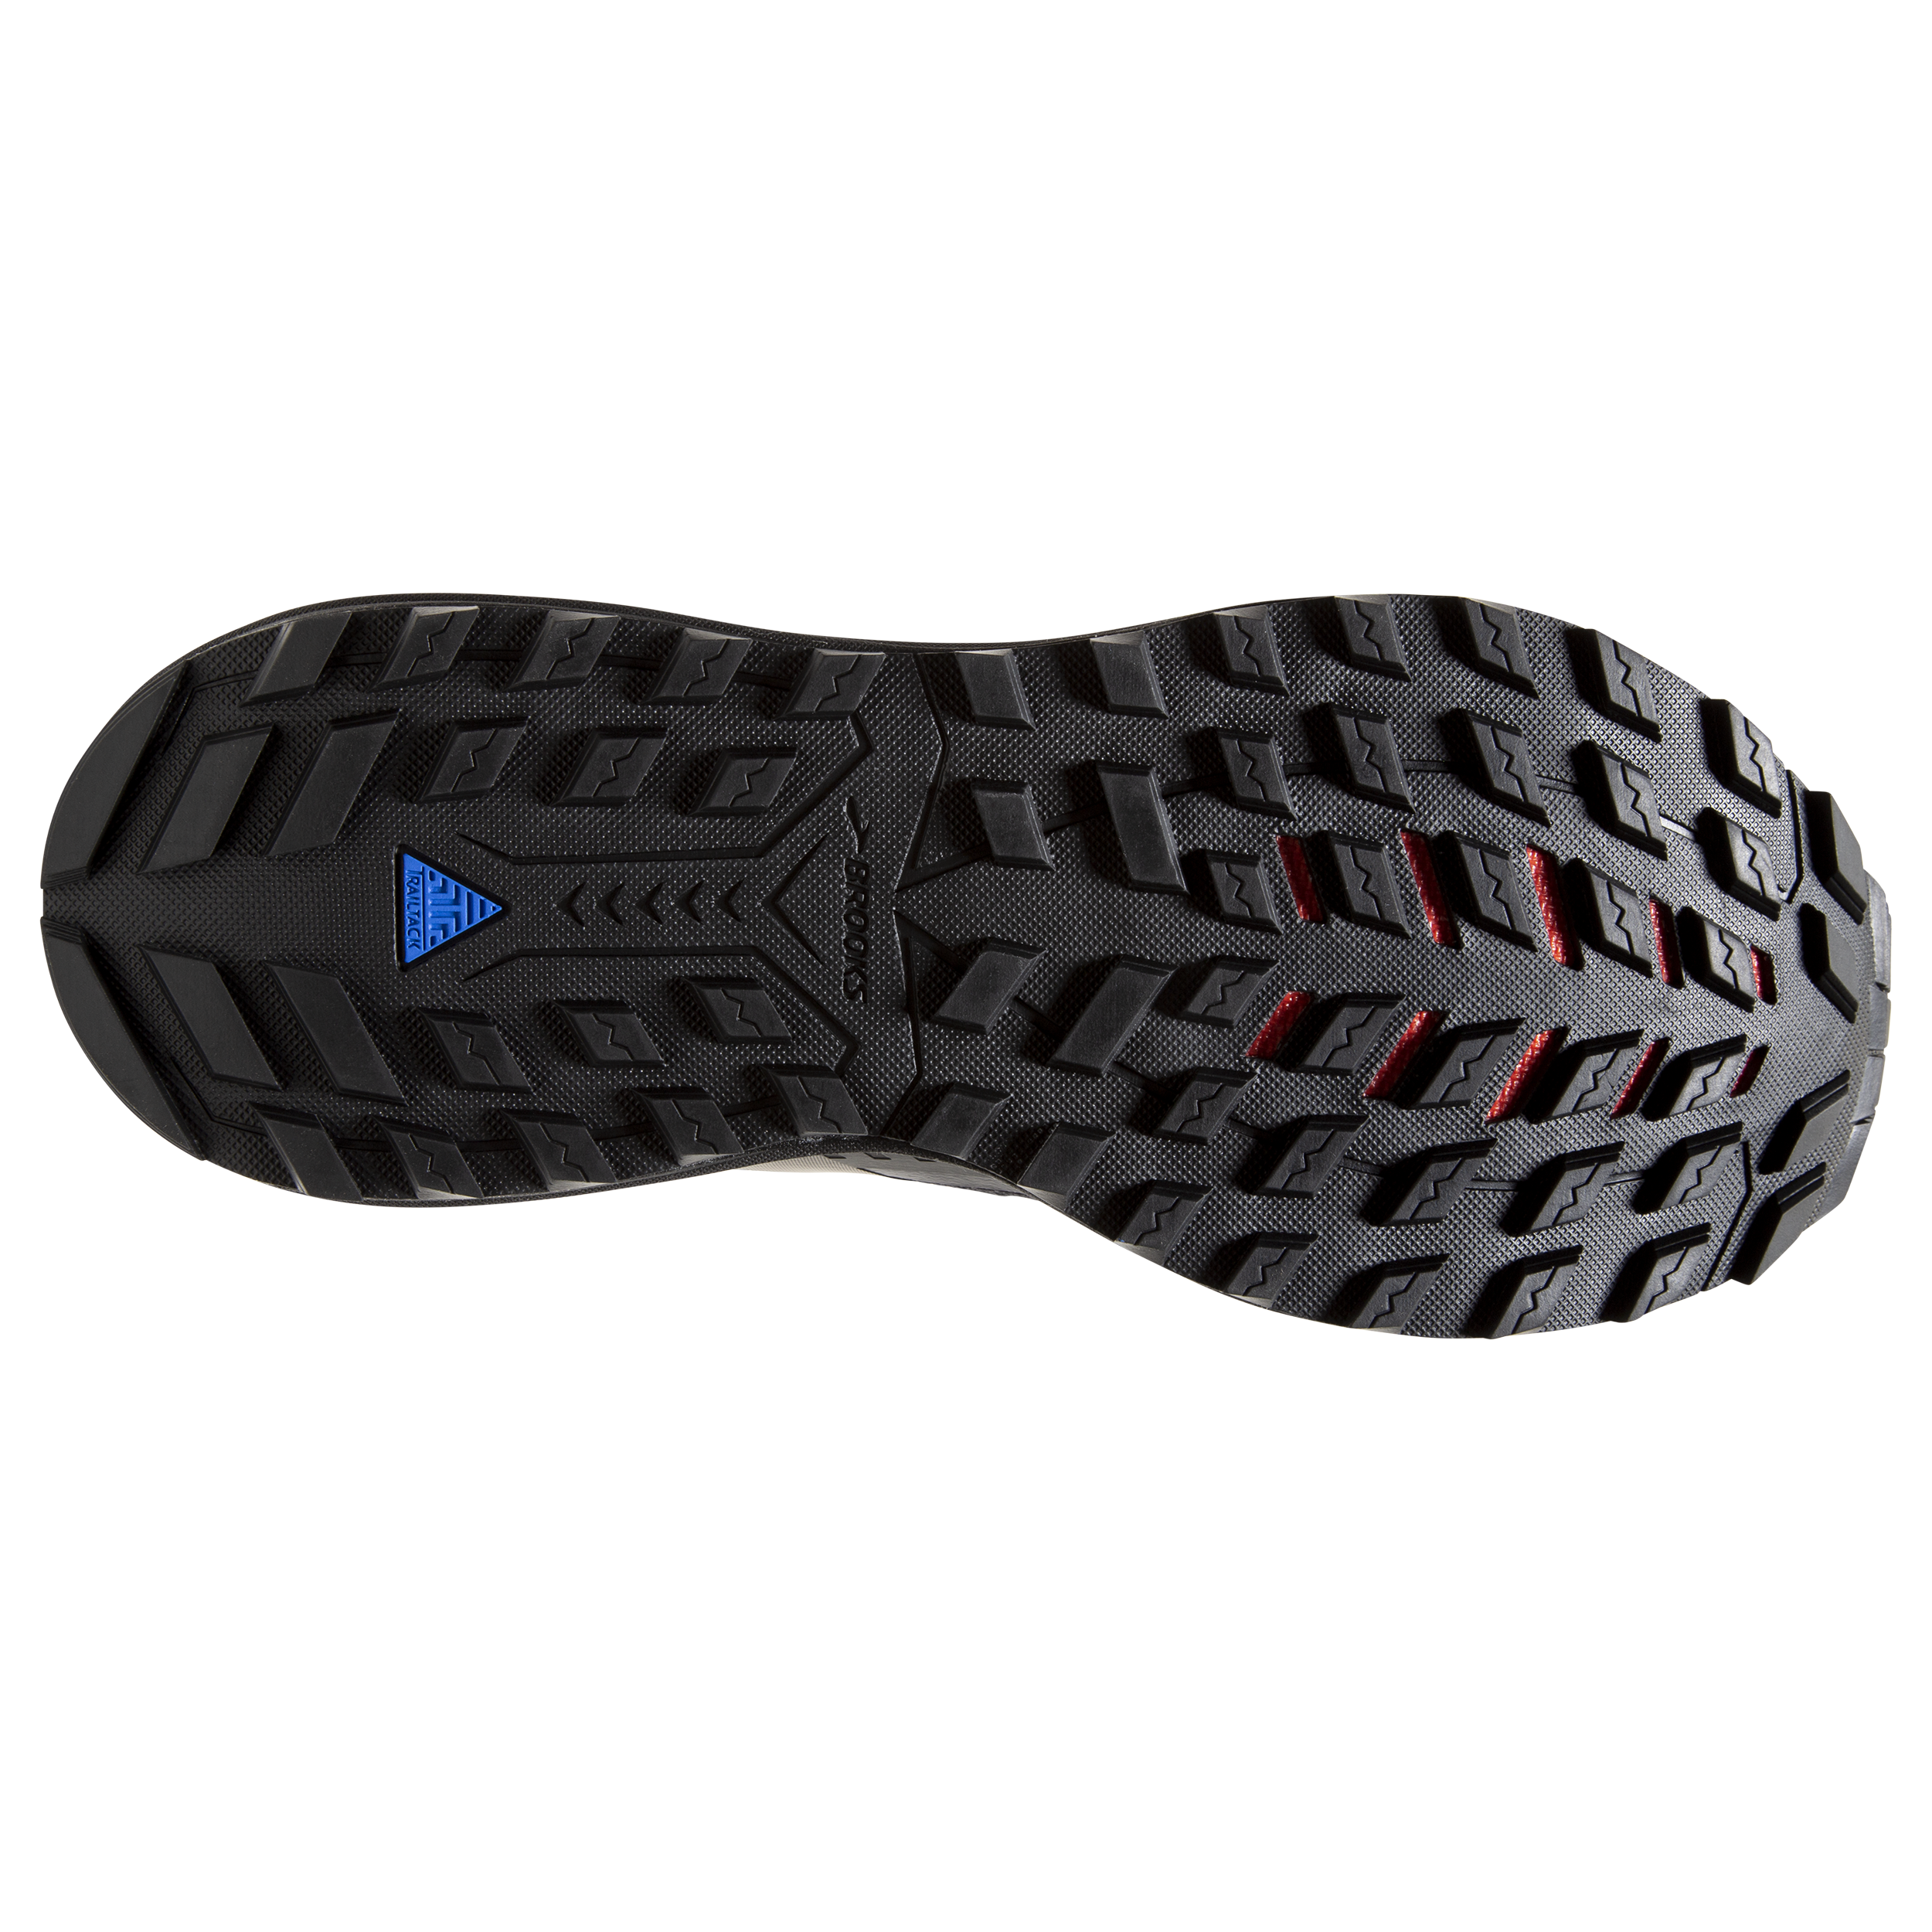 Brooks Cascadia 15 GTX Black Red Men GORE-TEX Trail Running Shoes 1103411D-075 